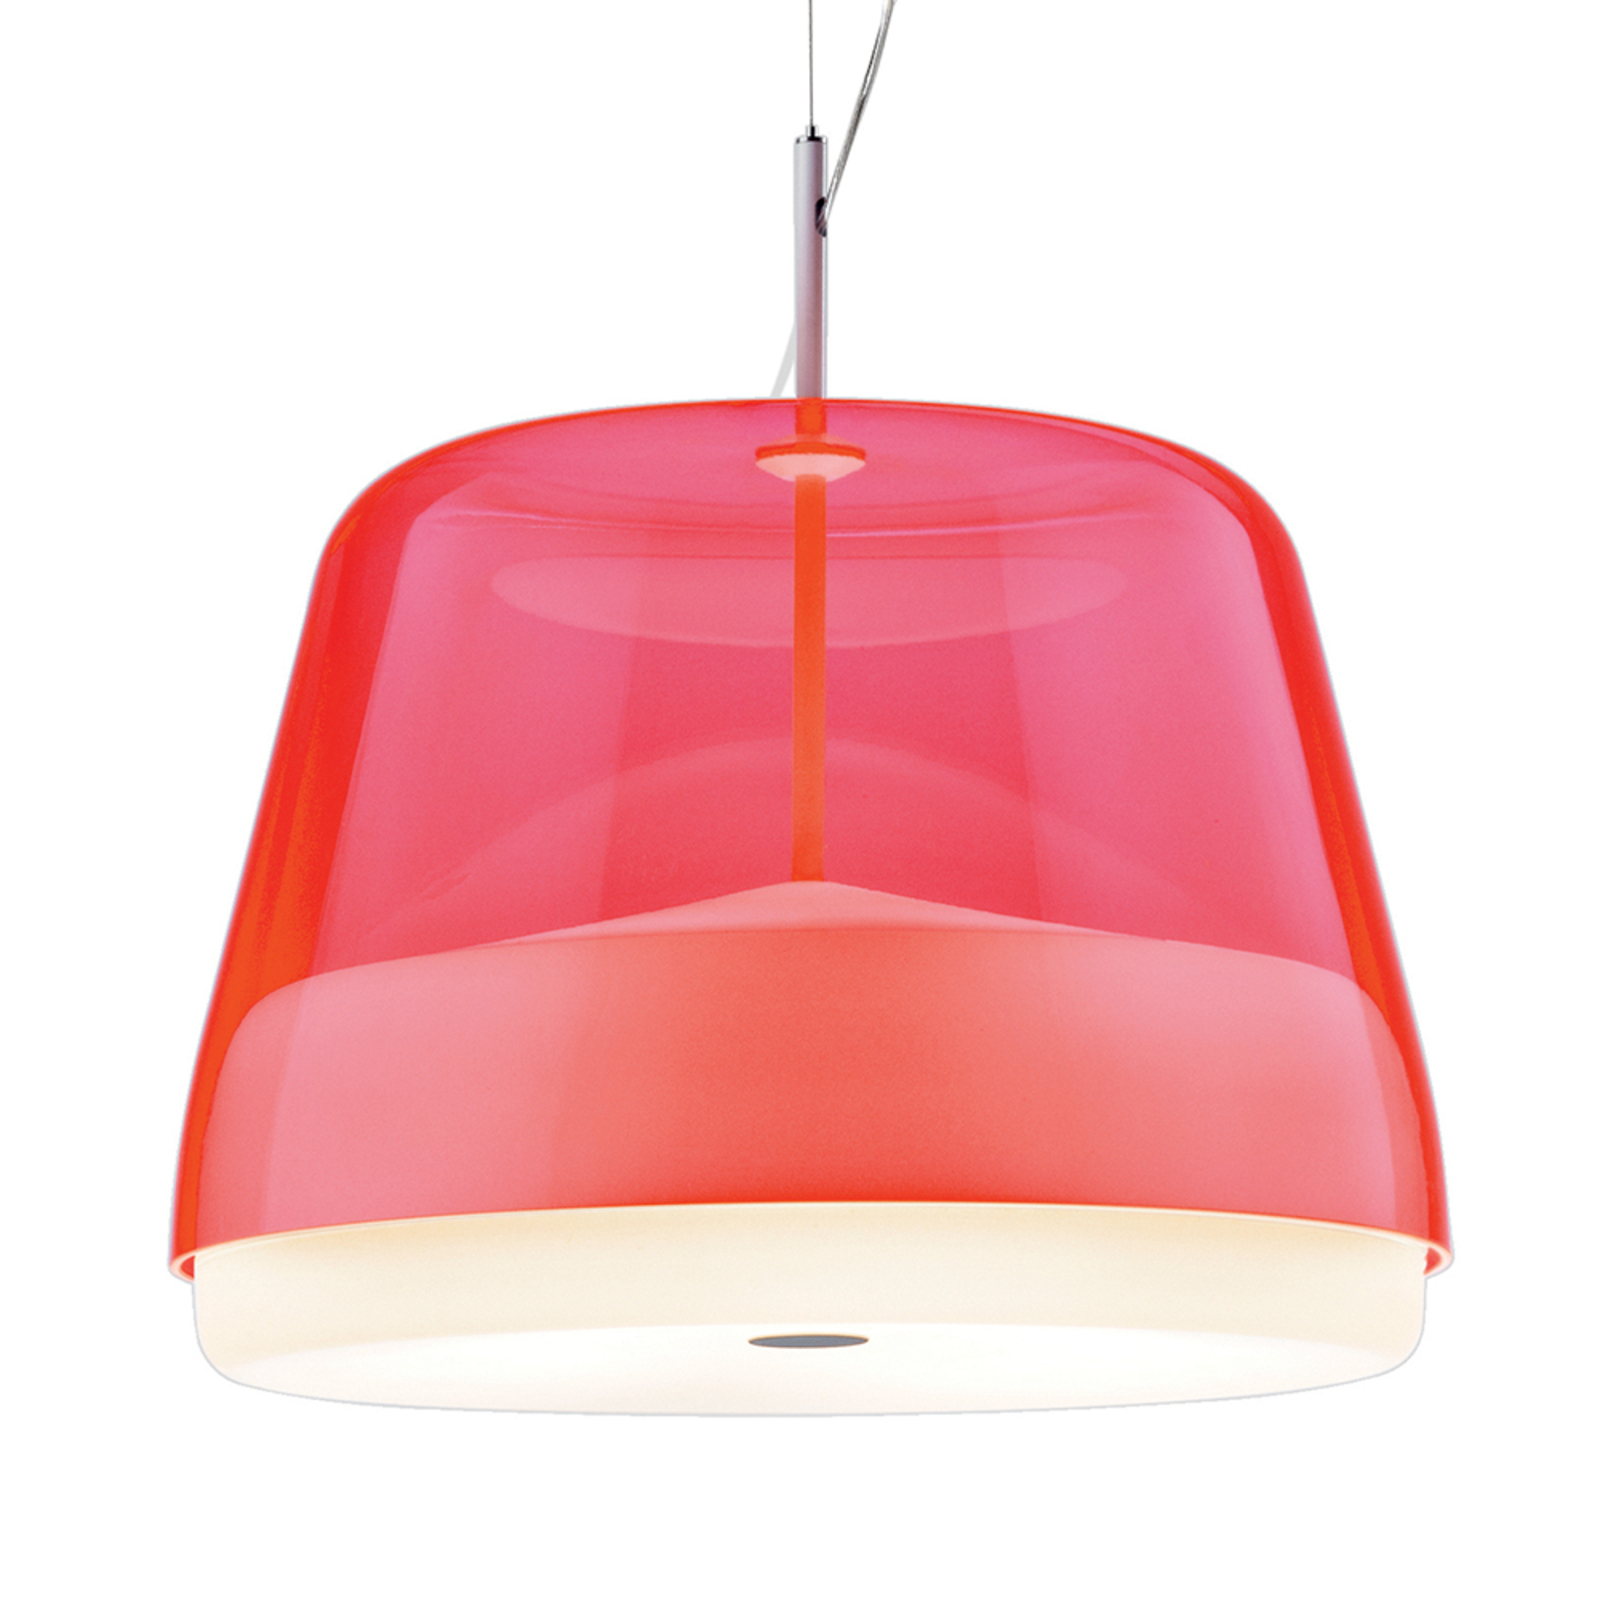 Prandina La Belle S5 lampa wisząca czerwona